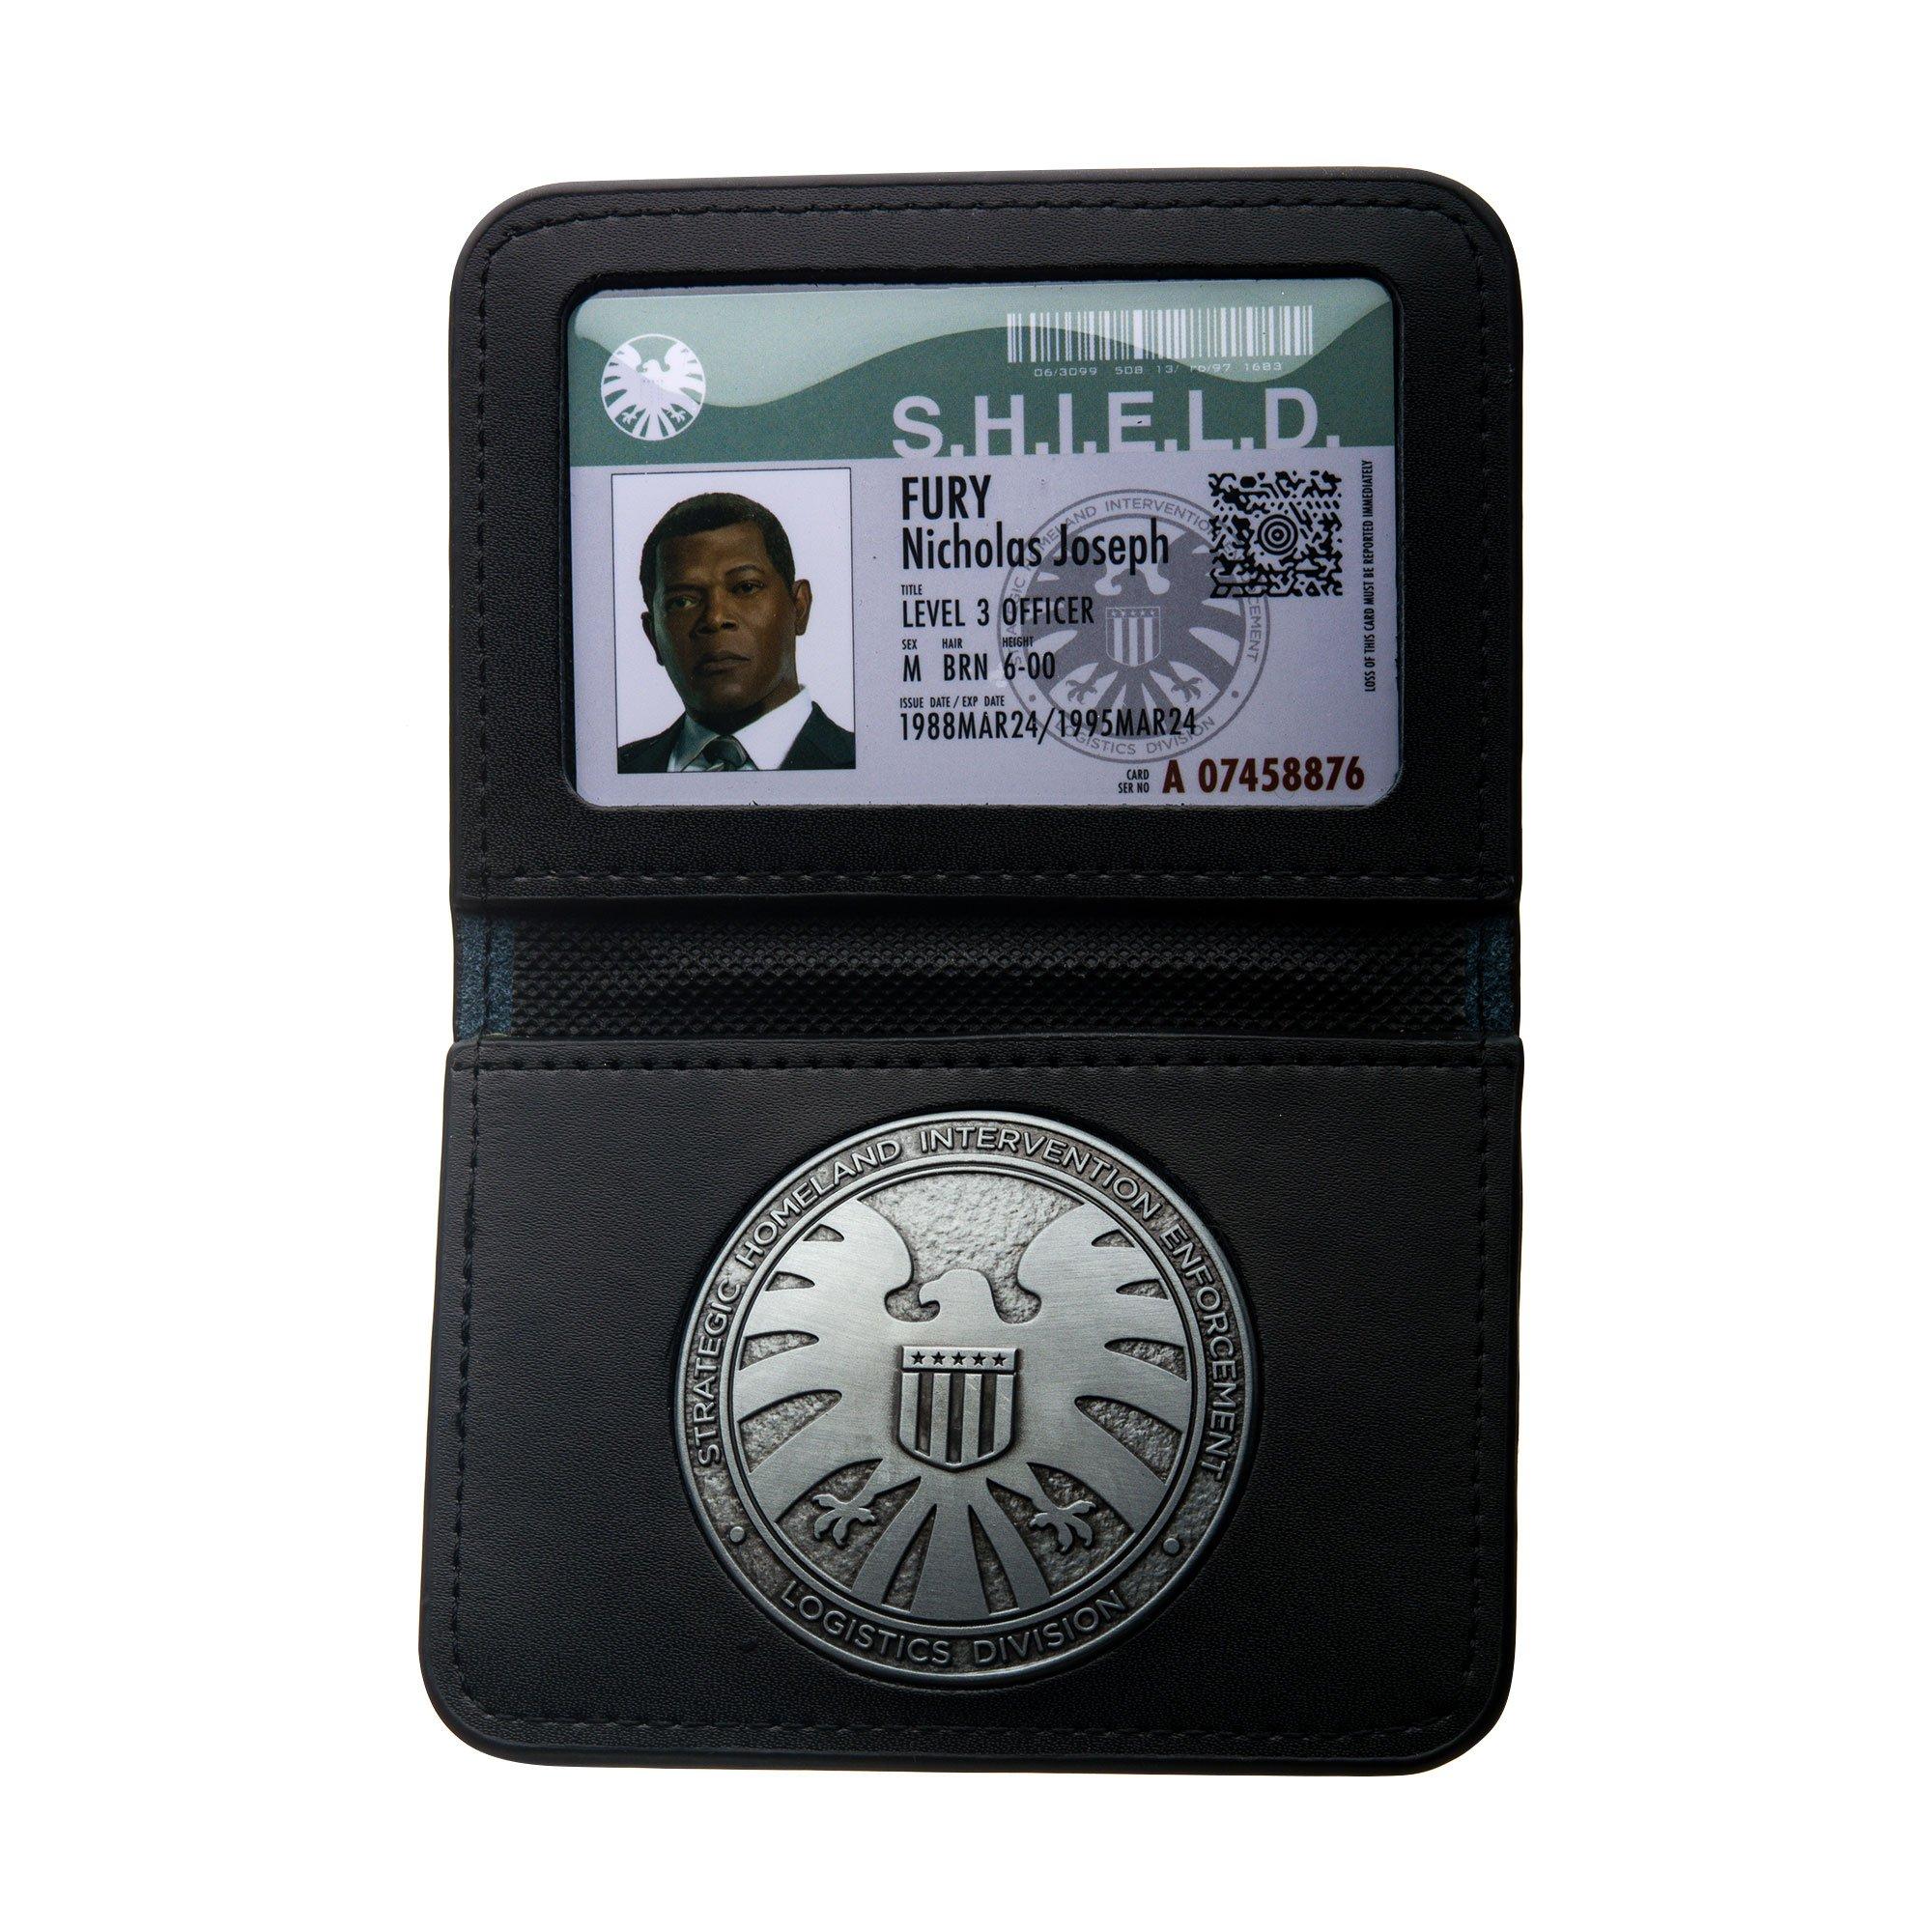 Captain Marvel S.H.I.E.L.D Badge Wallet